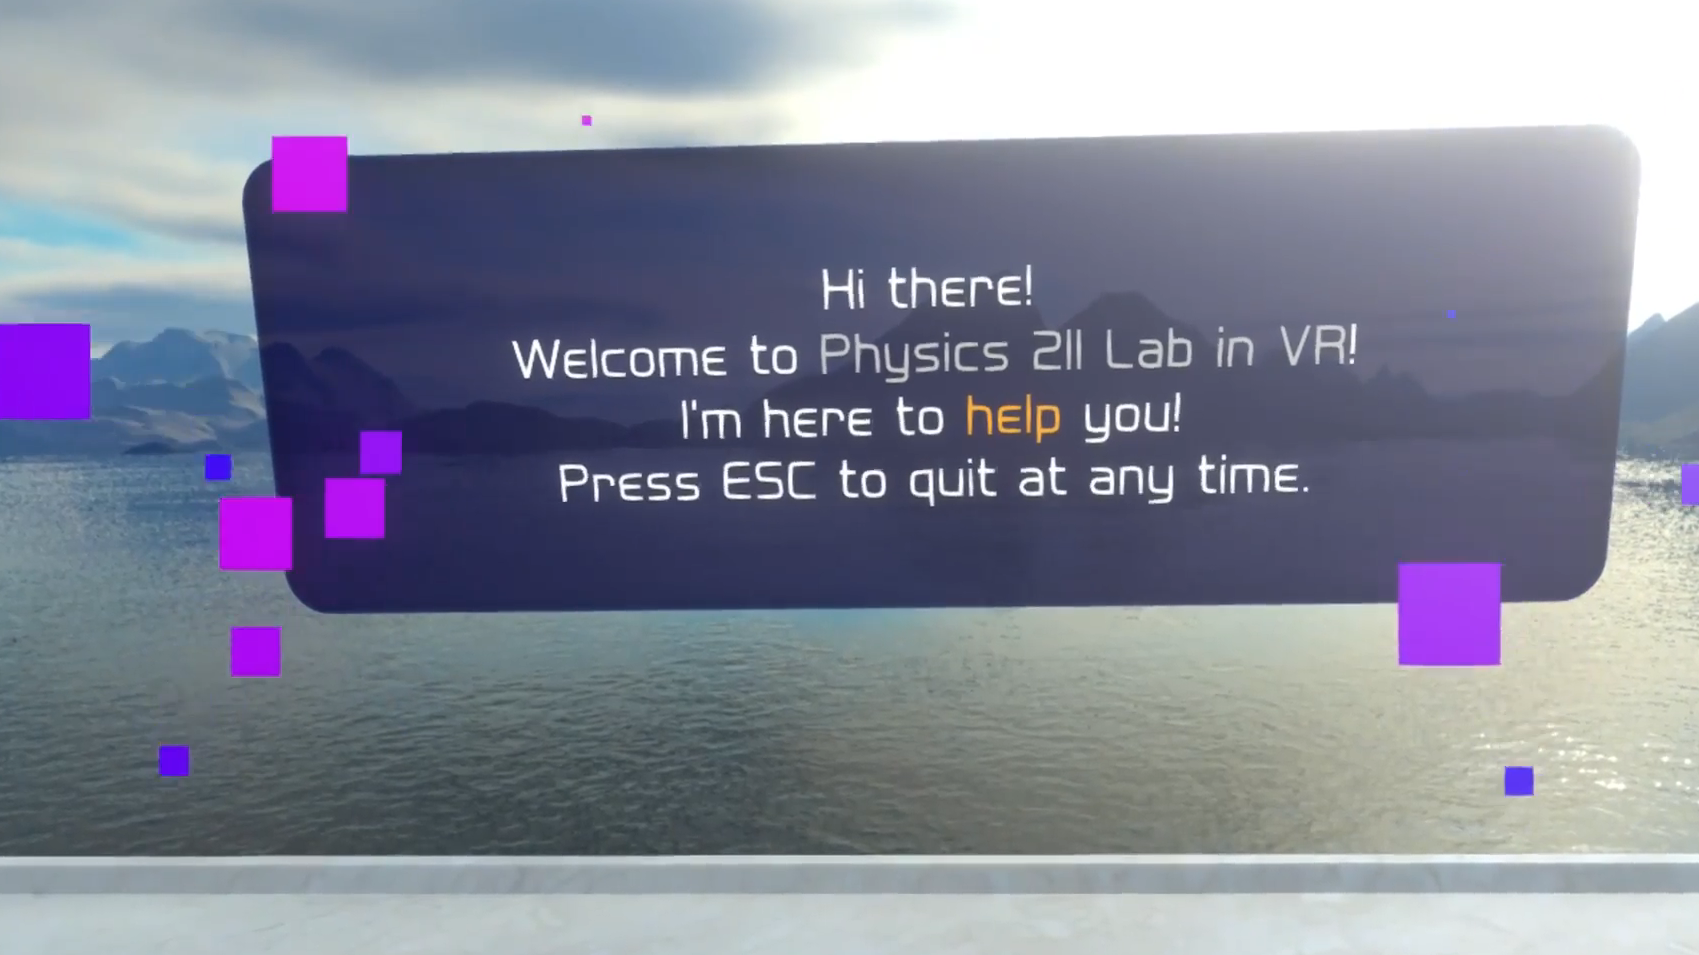 The Physics Lab image